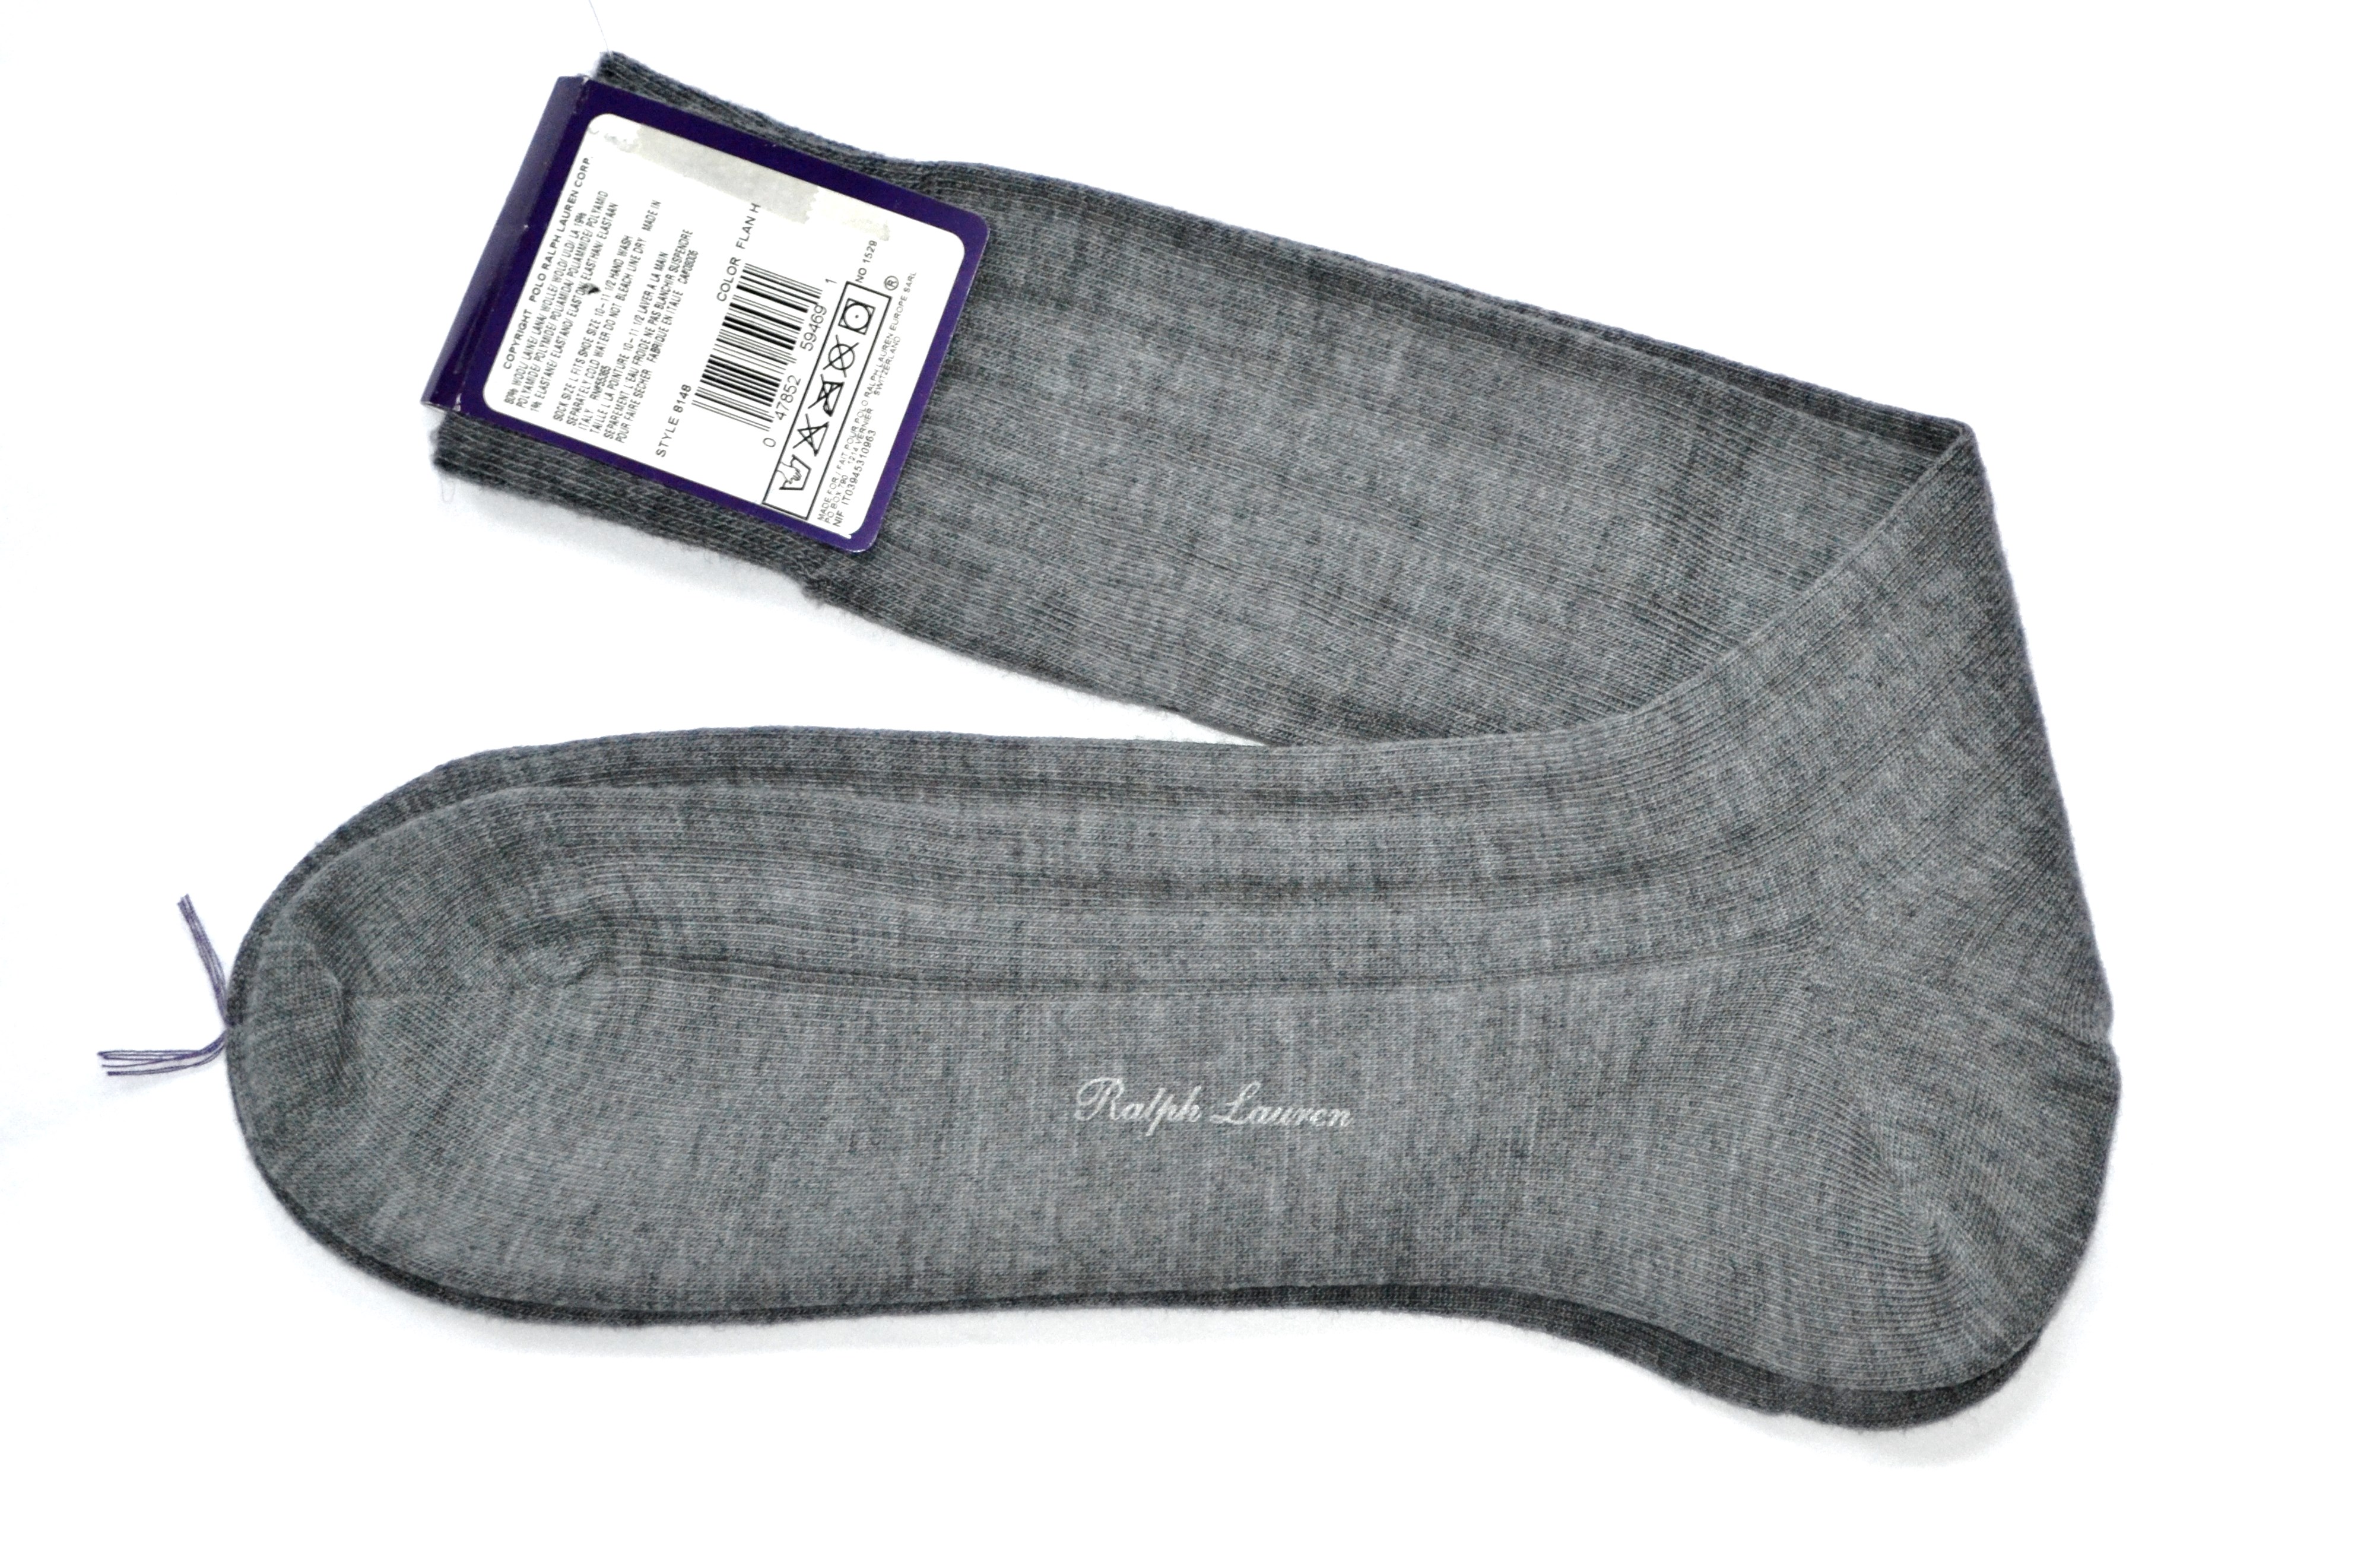 ralph lauren purple label socks